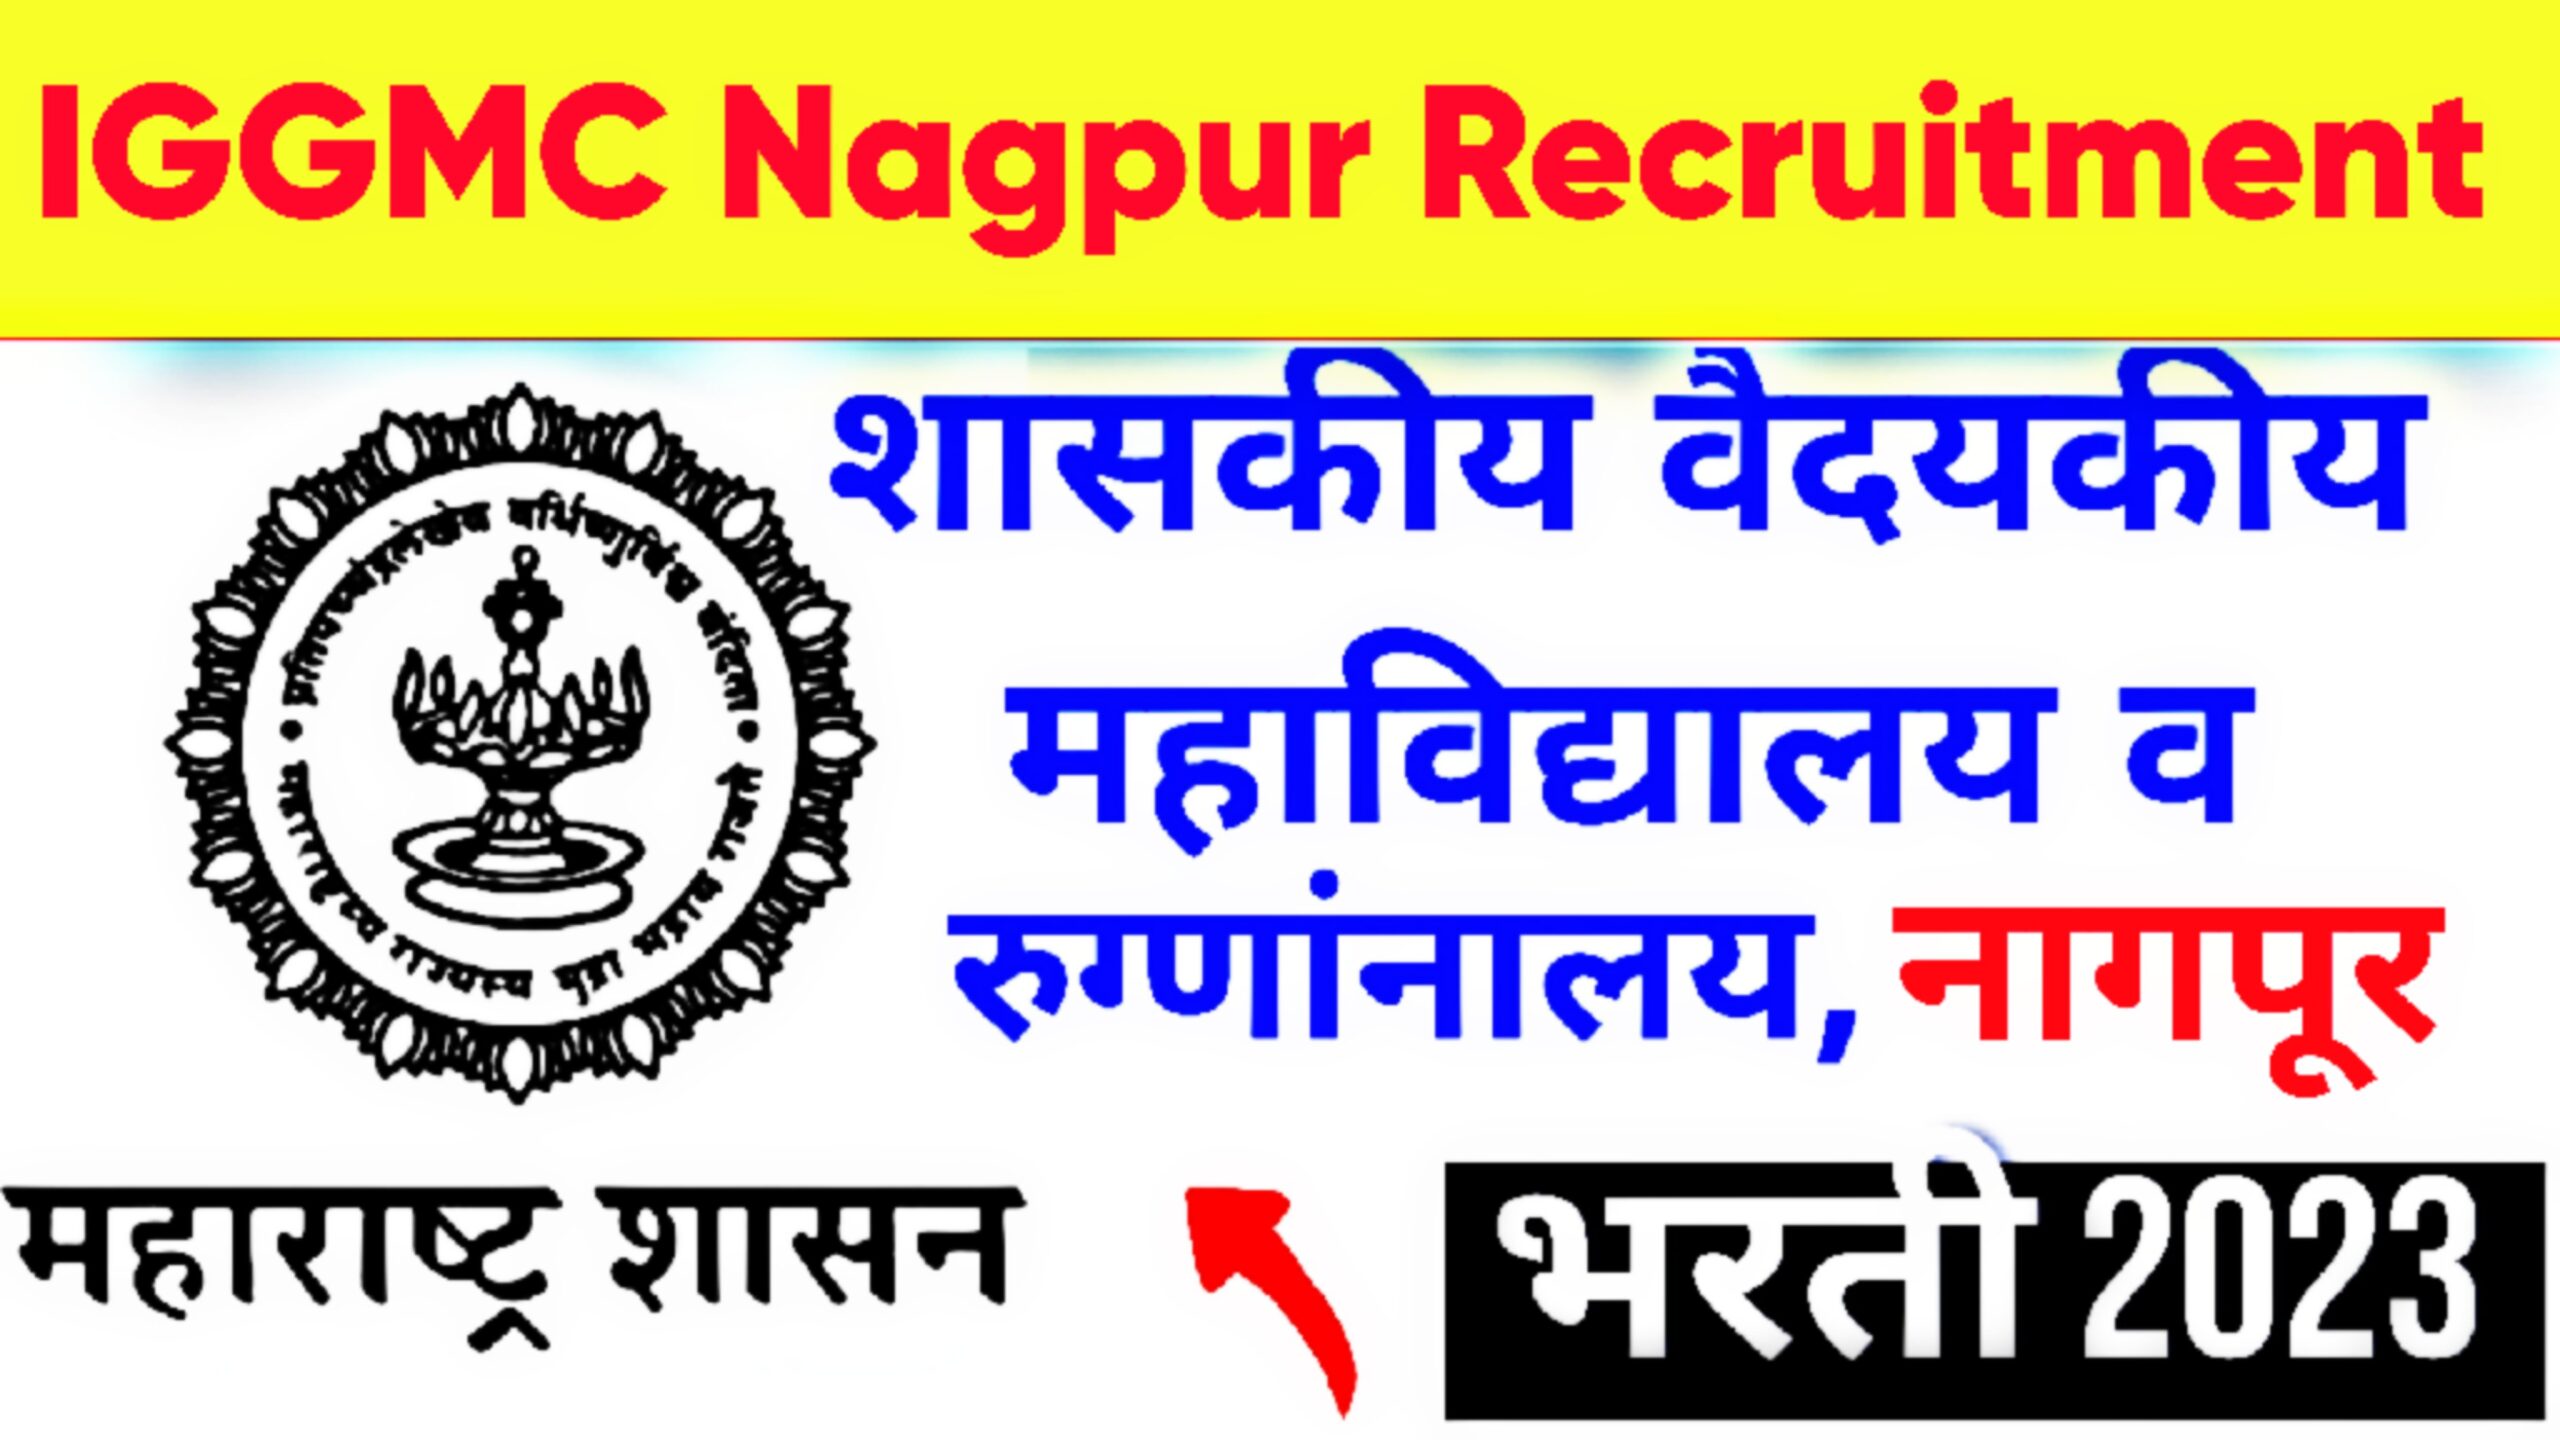 IGGMC Nagpur Bharti 2023